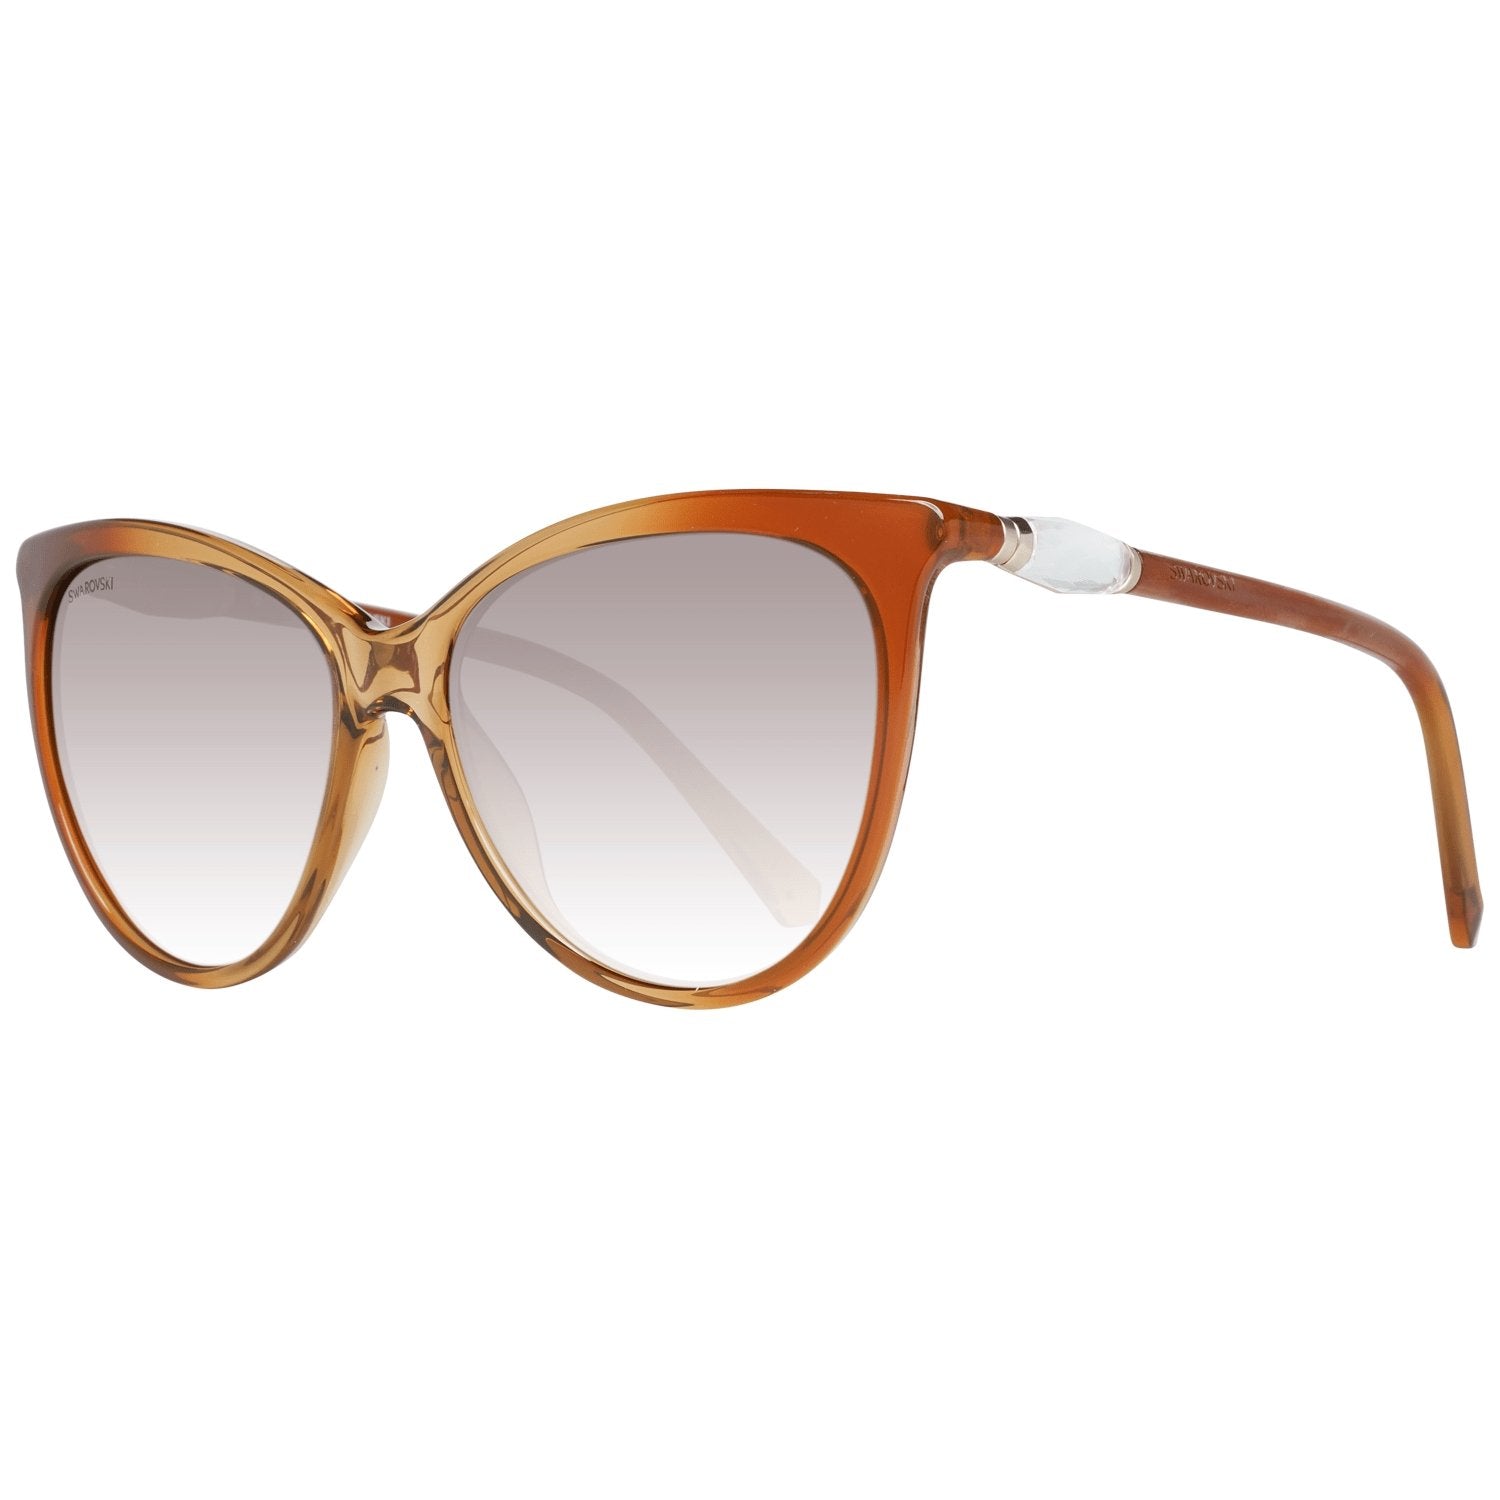 Swarovski Brown Sunglasses for Woman - Fizigo